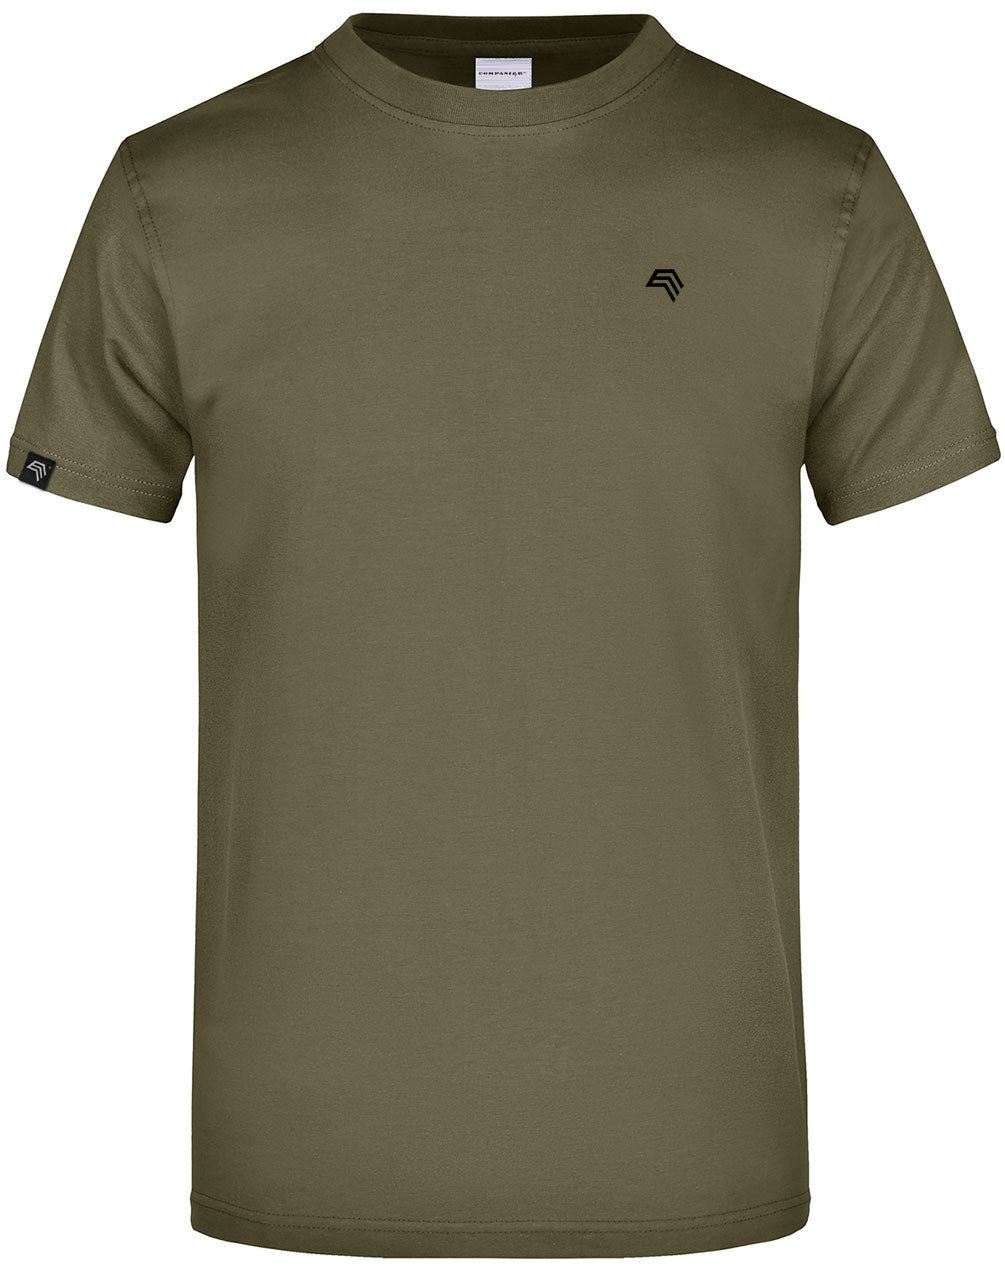 ― % ― JAN 0002/10A ― Herren Komfort T-Shirt - Olive Grün [2XL]